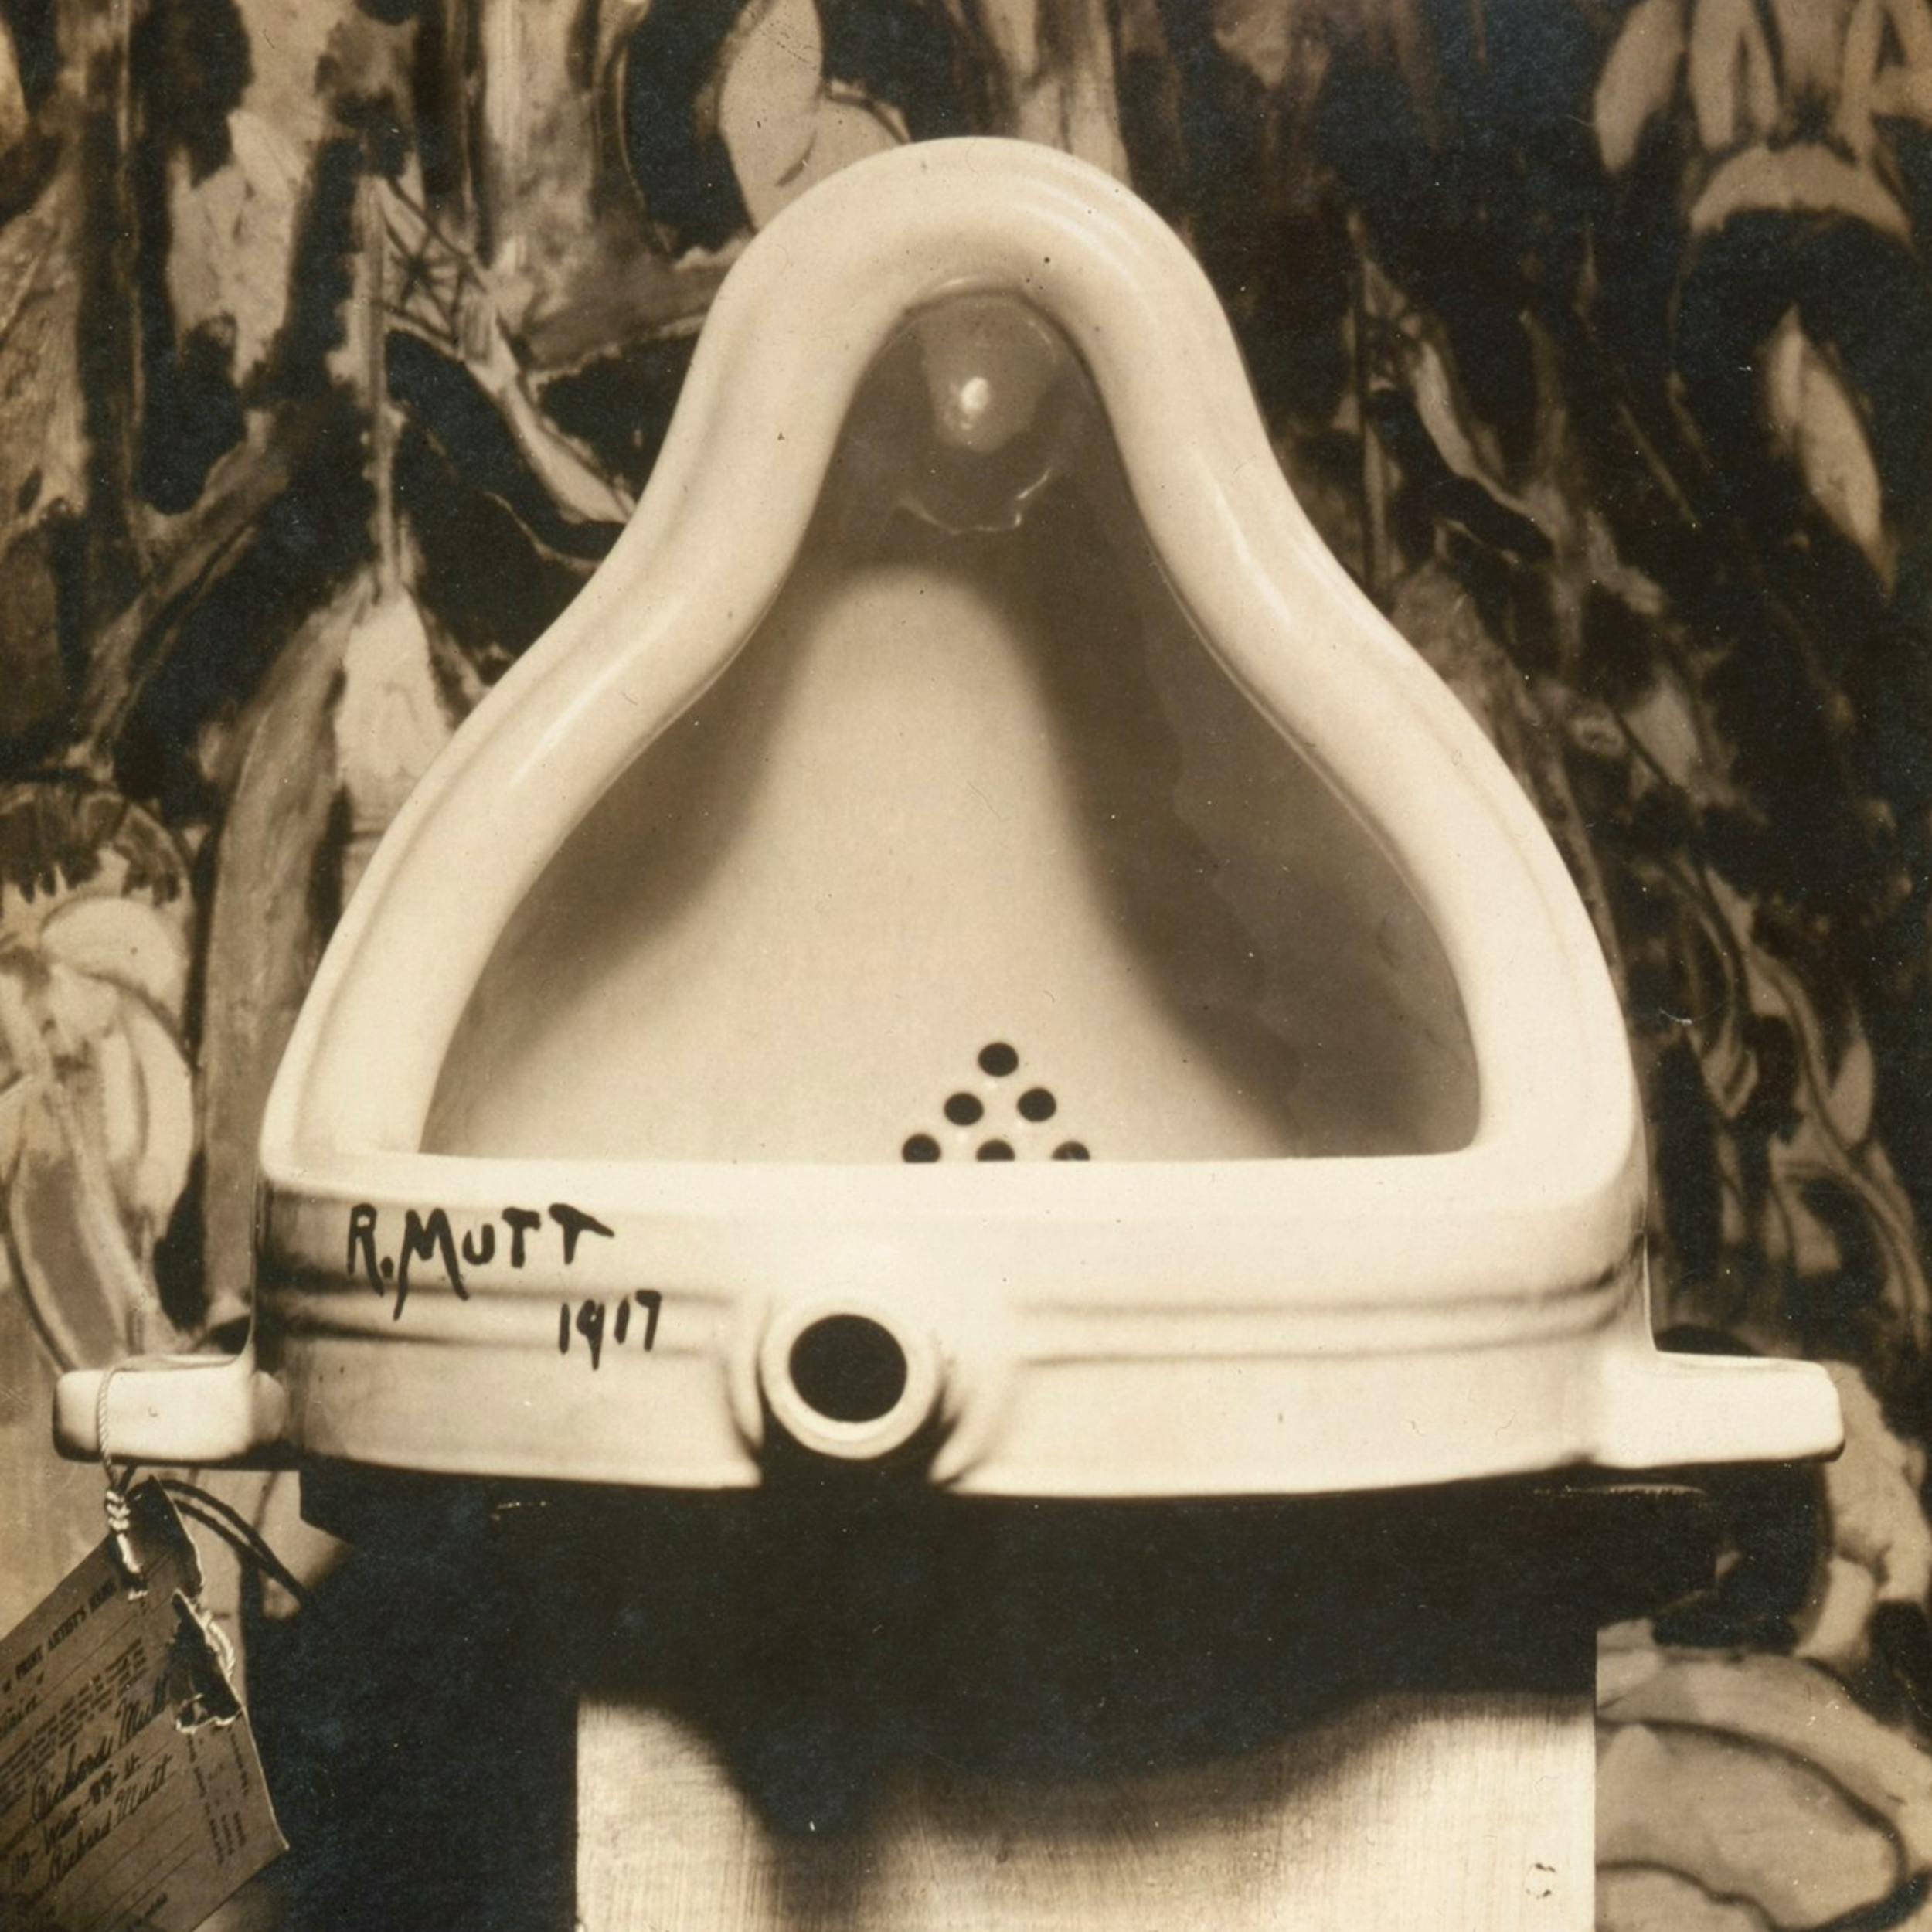 Marcel Duchamp | Fountain